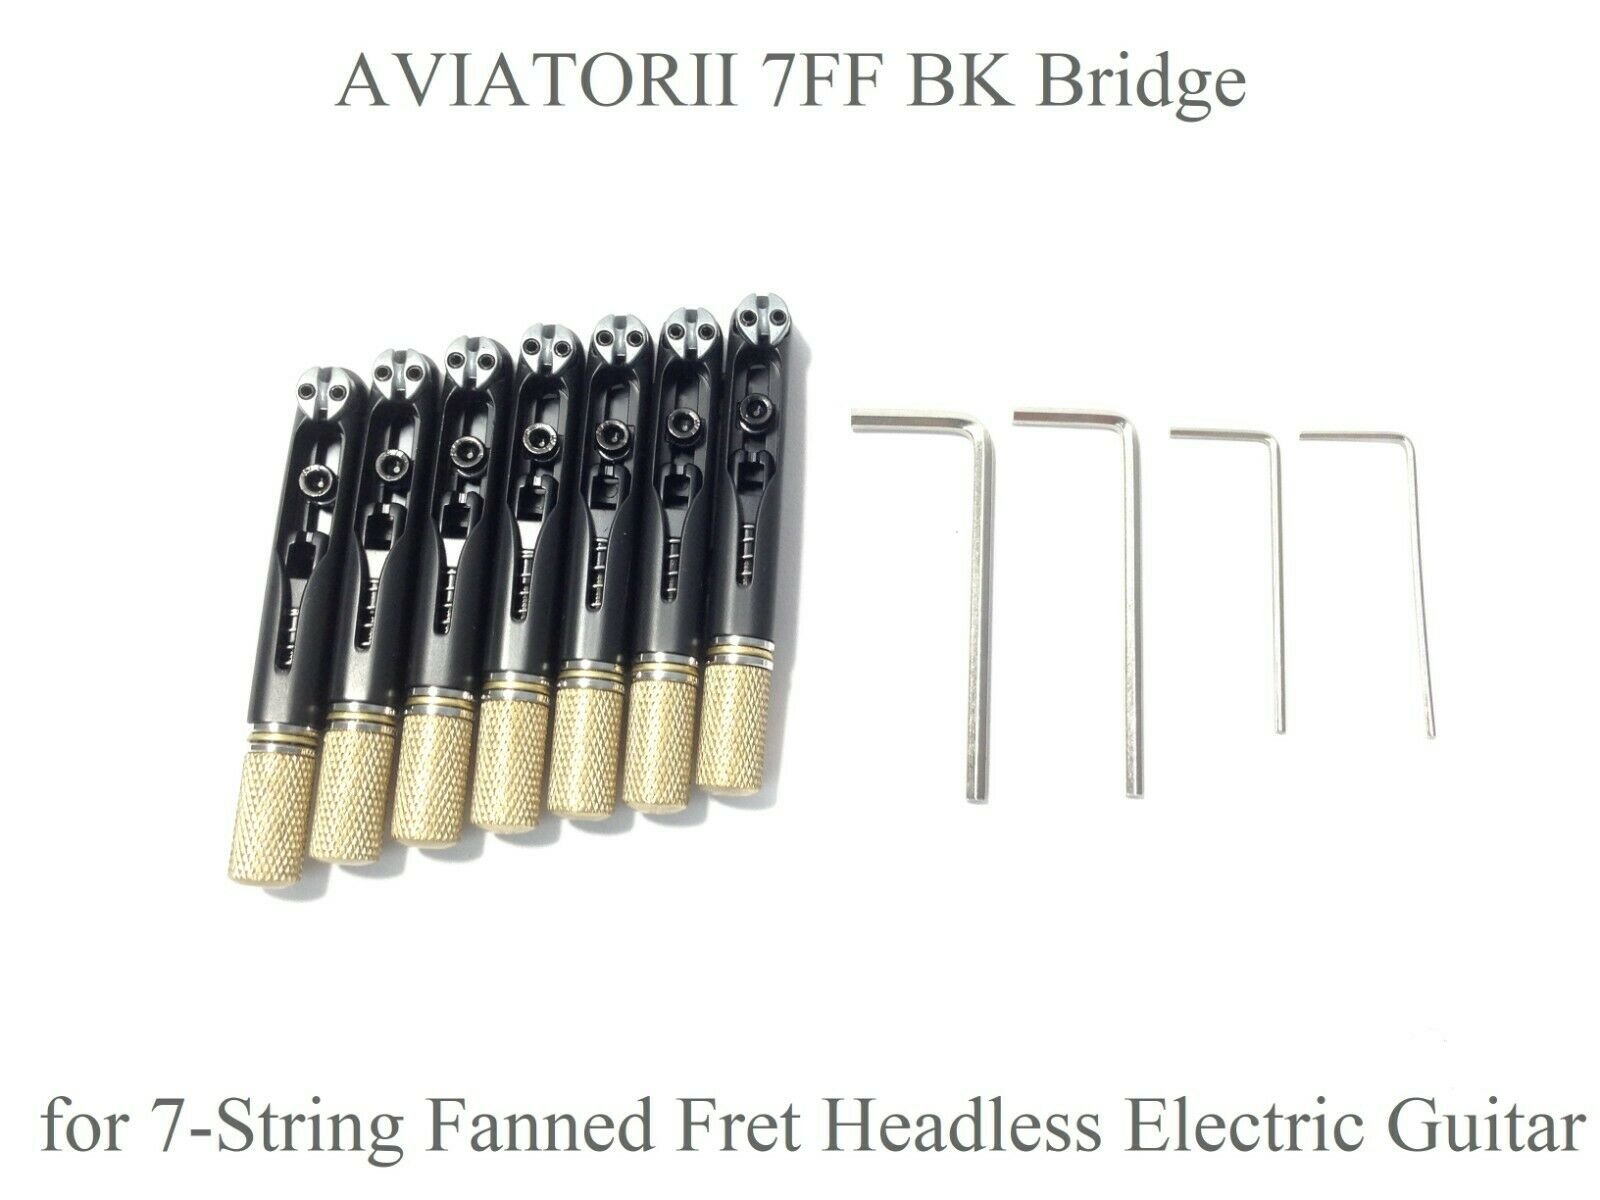 Koloss AVIATOR II 7FF BK Bridge for 7-String Fanned Fret Headless Electric Guitar